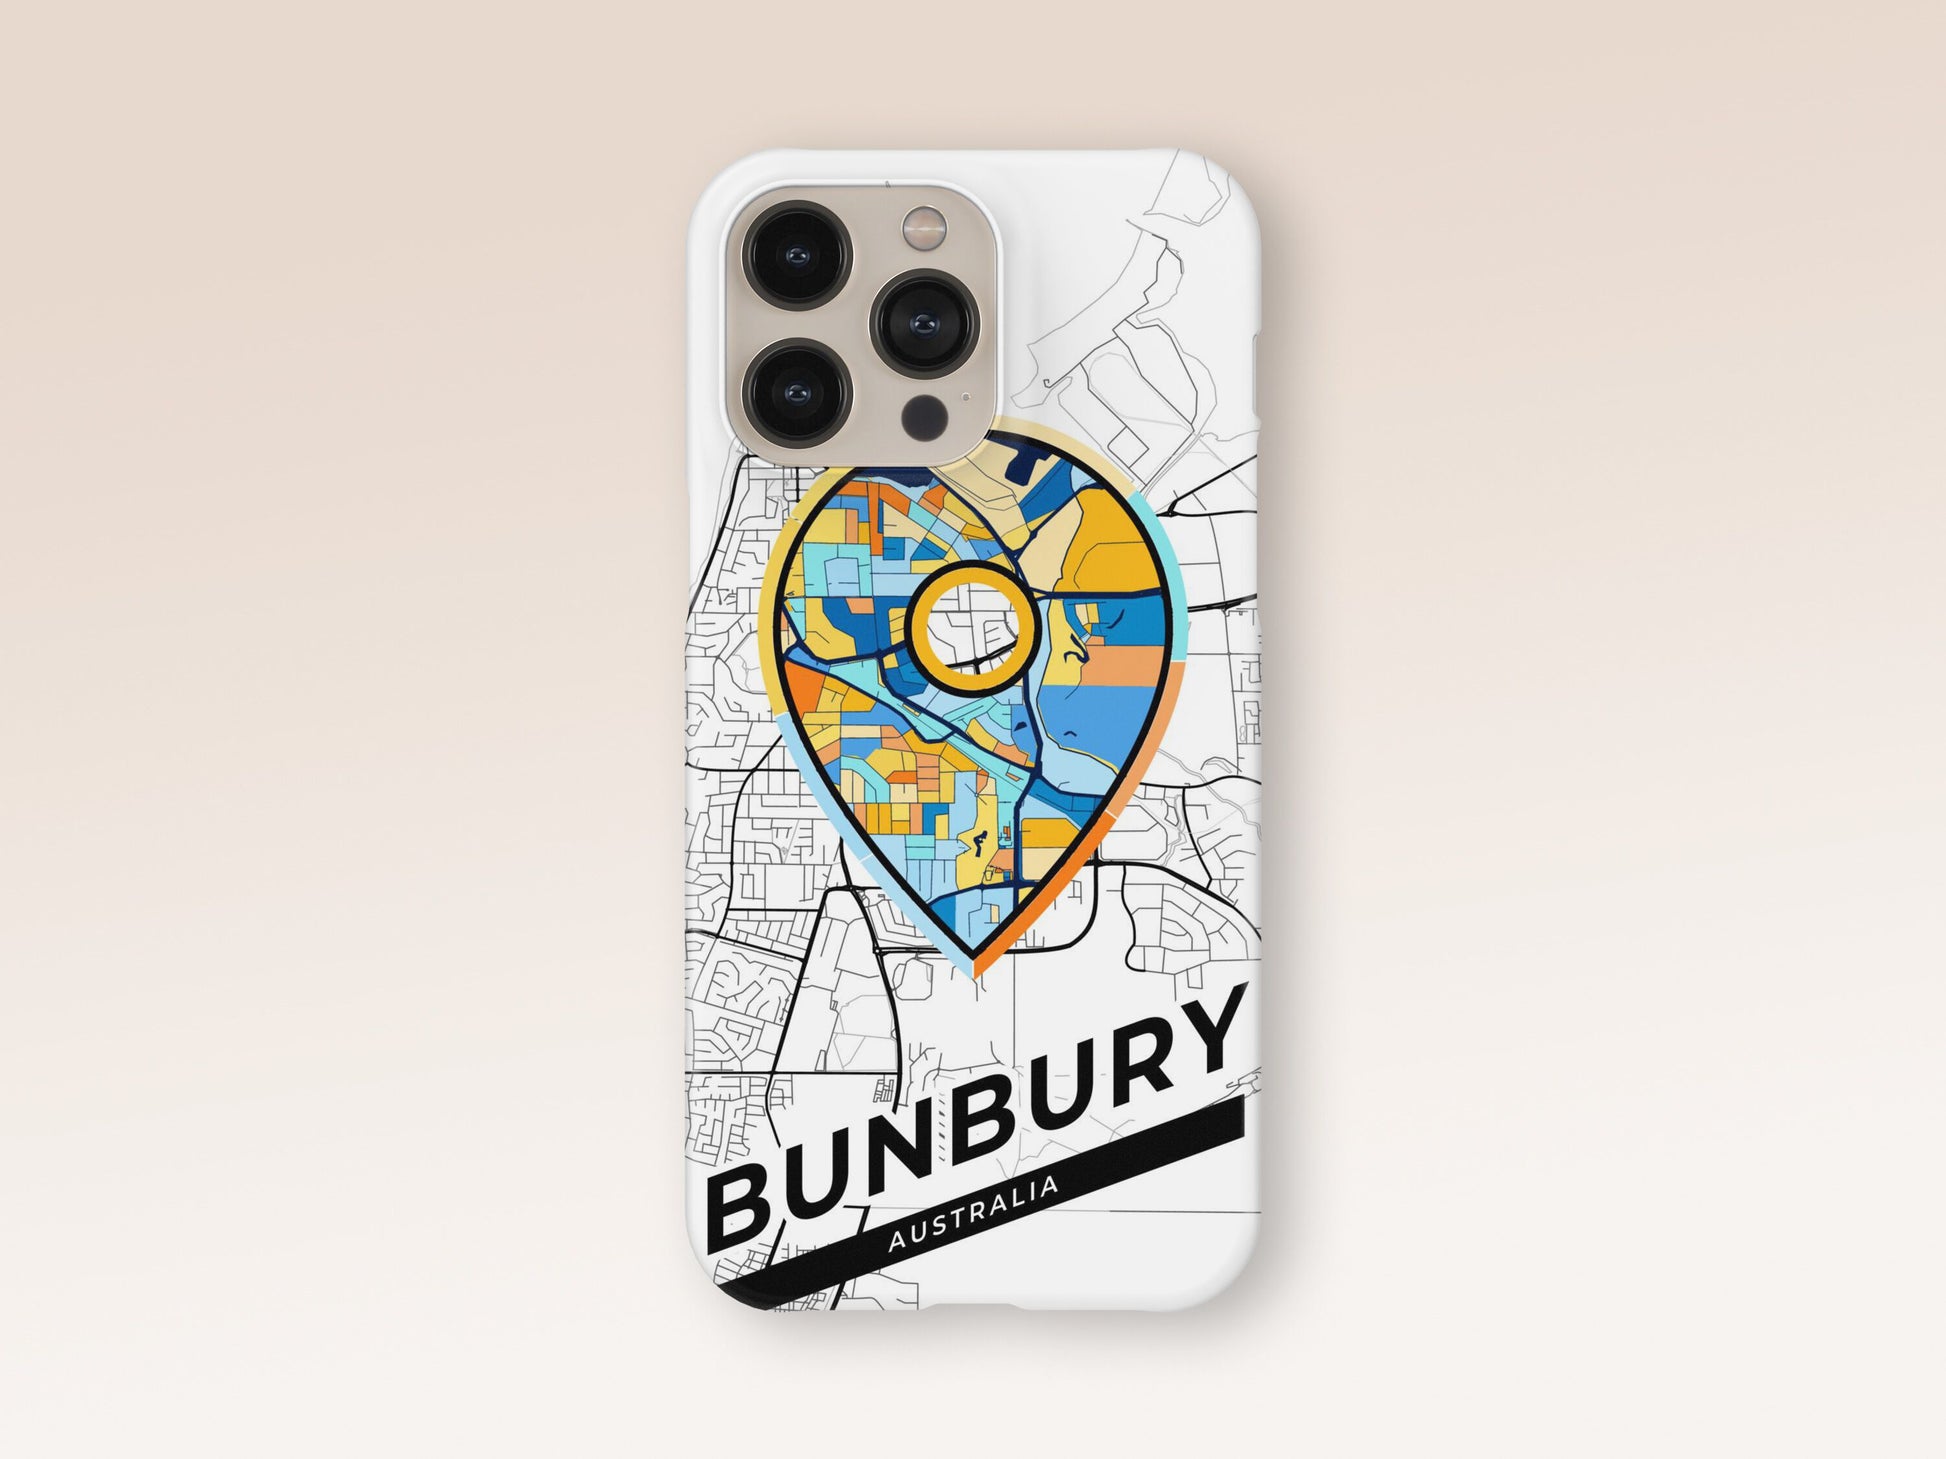 Bunbury Australia slim phone case with colorful icon. Birthday, wedding or housewarming gift. Couple match cases. 1